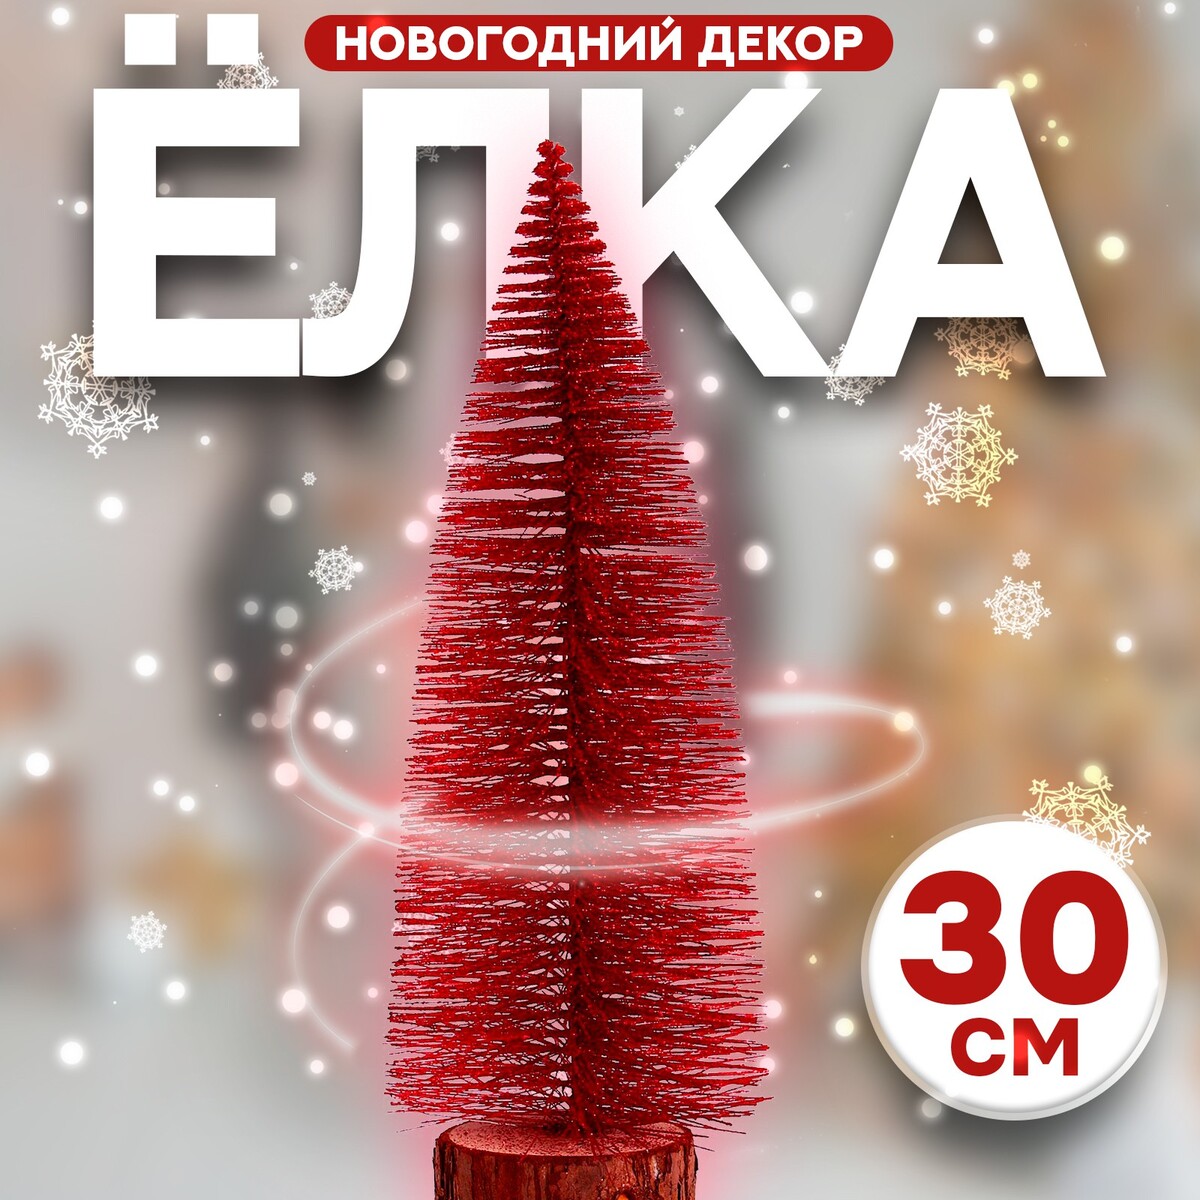 Новогодний декор новогодний декор ёлка в красном е с блестками 8 × 8 × 30 см